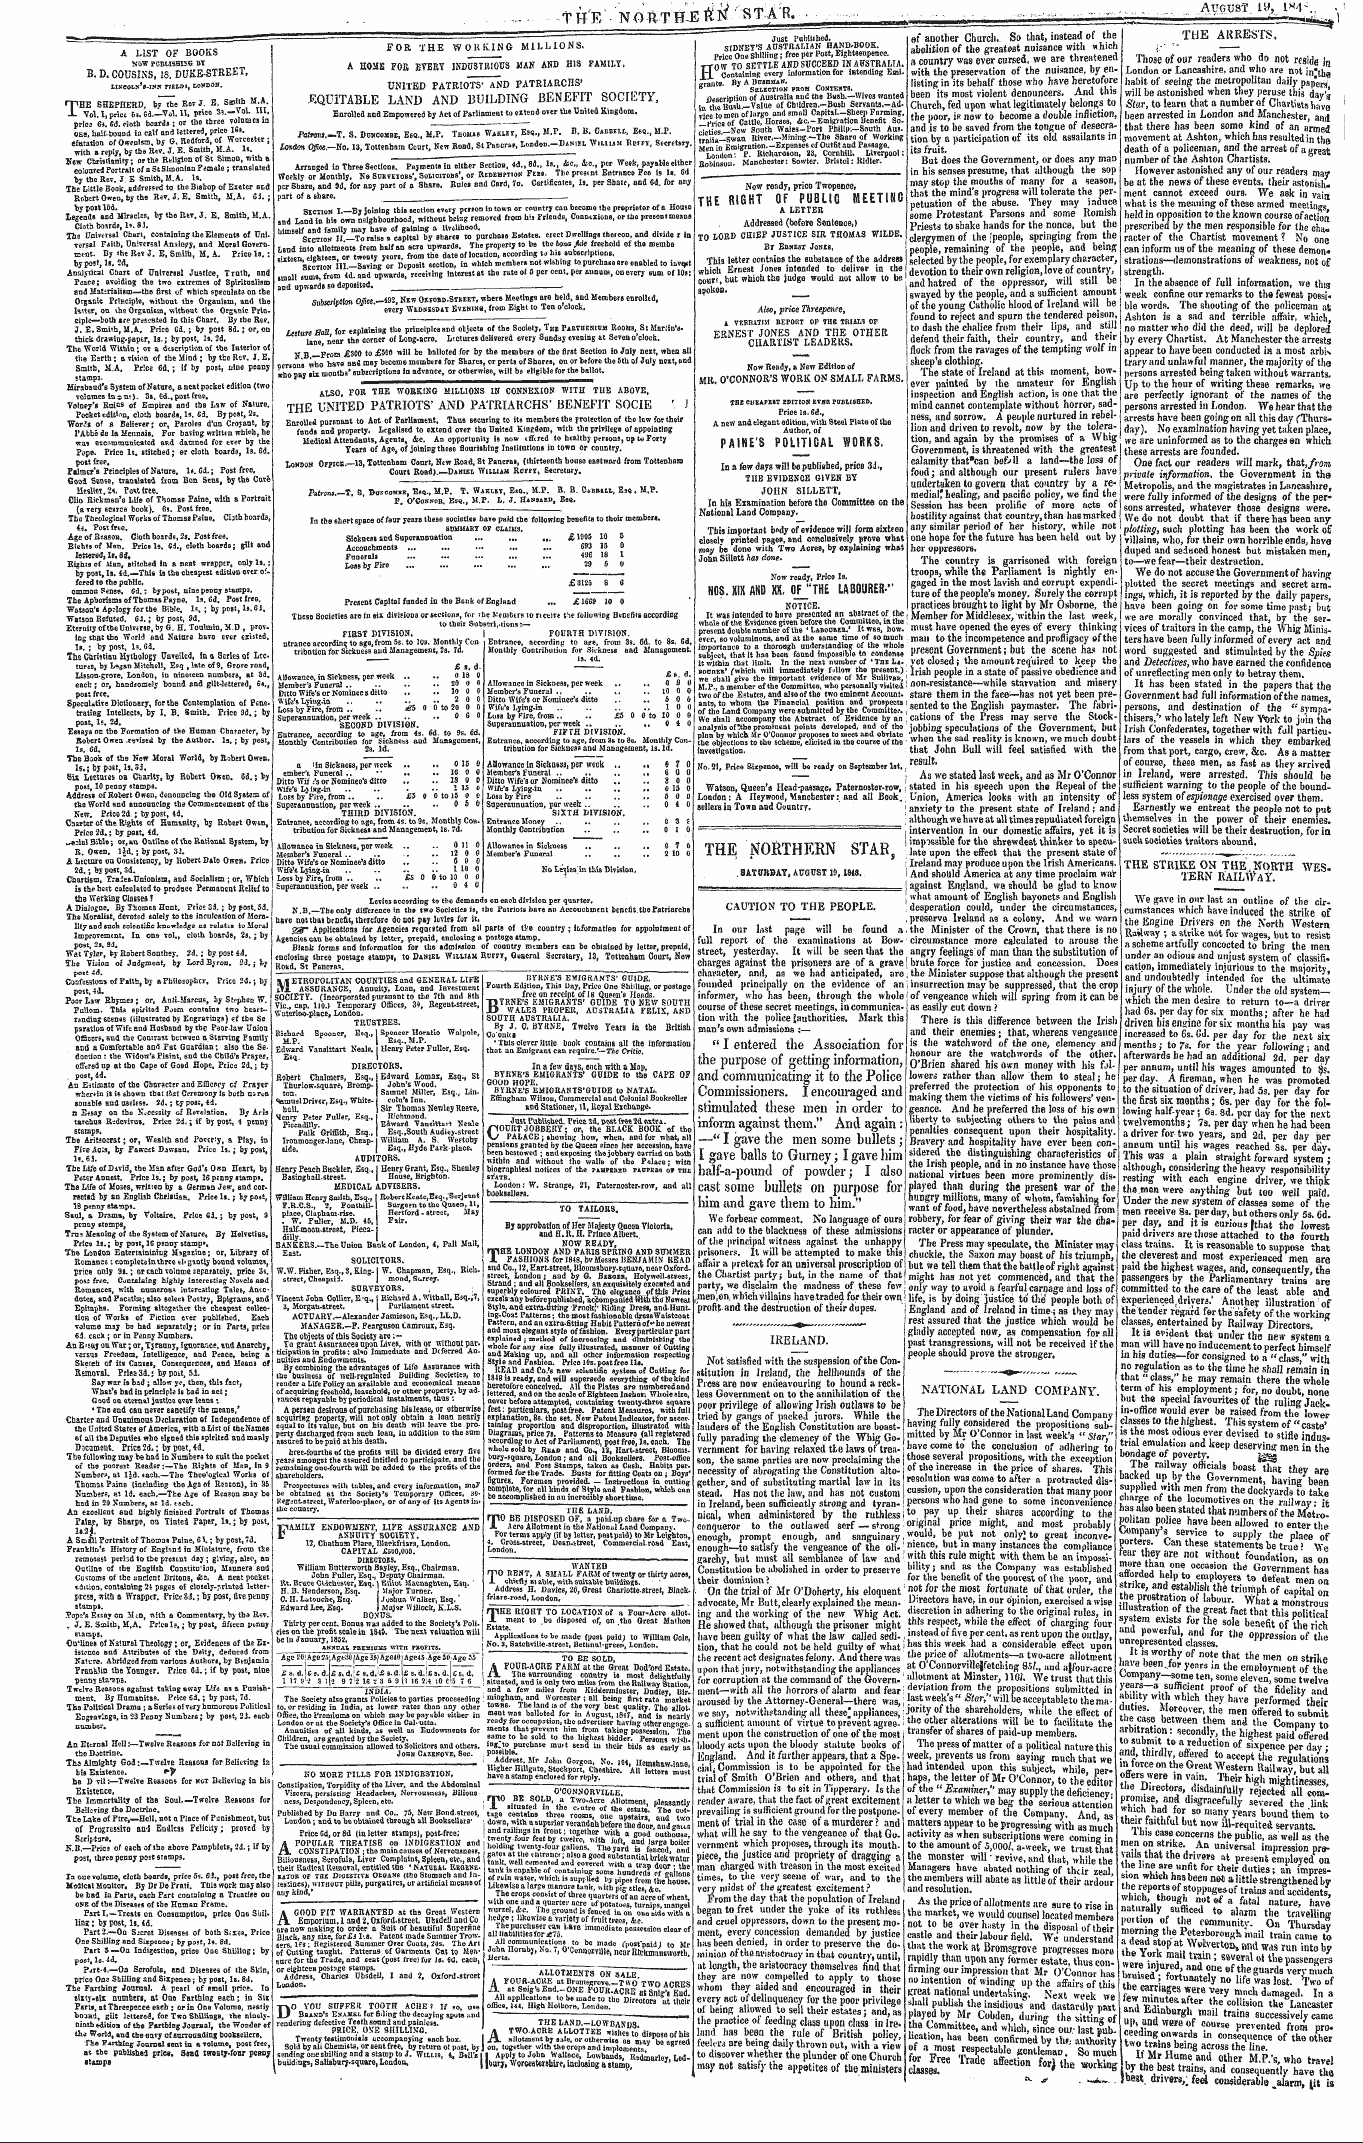 Northern Star (1837-1852): jS F Y, 3rd edition - Ad00419